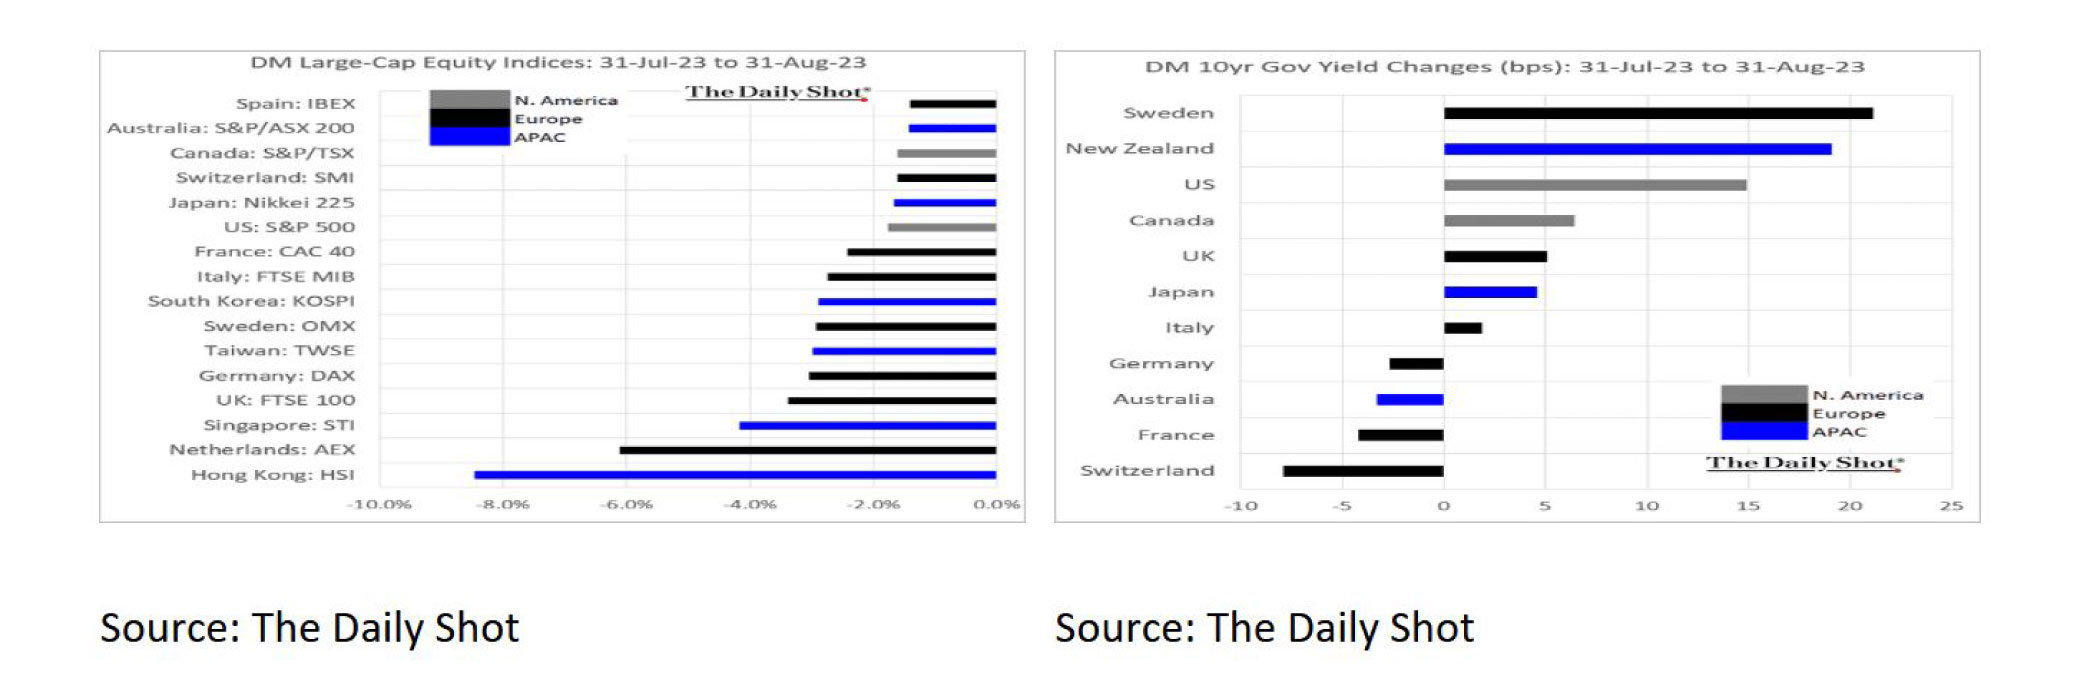 DM Large-Cap Equity Indices